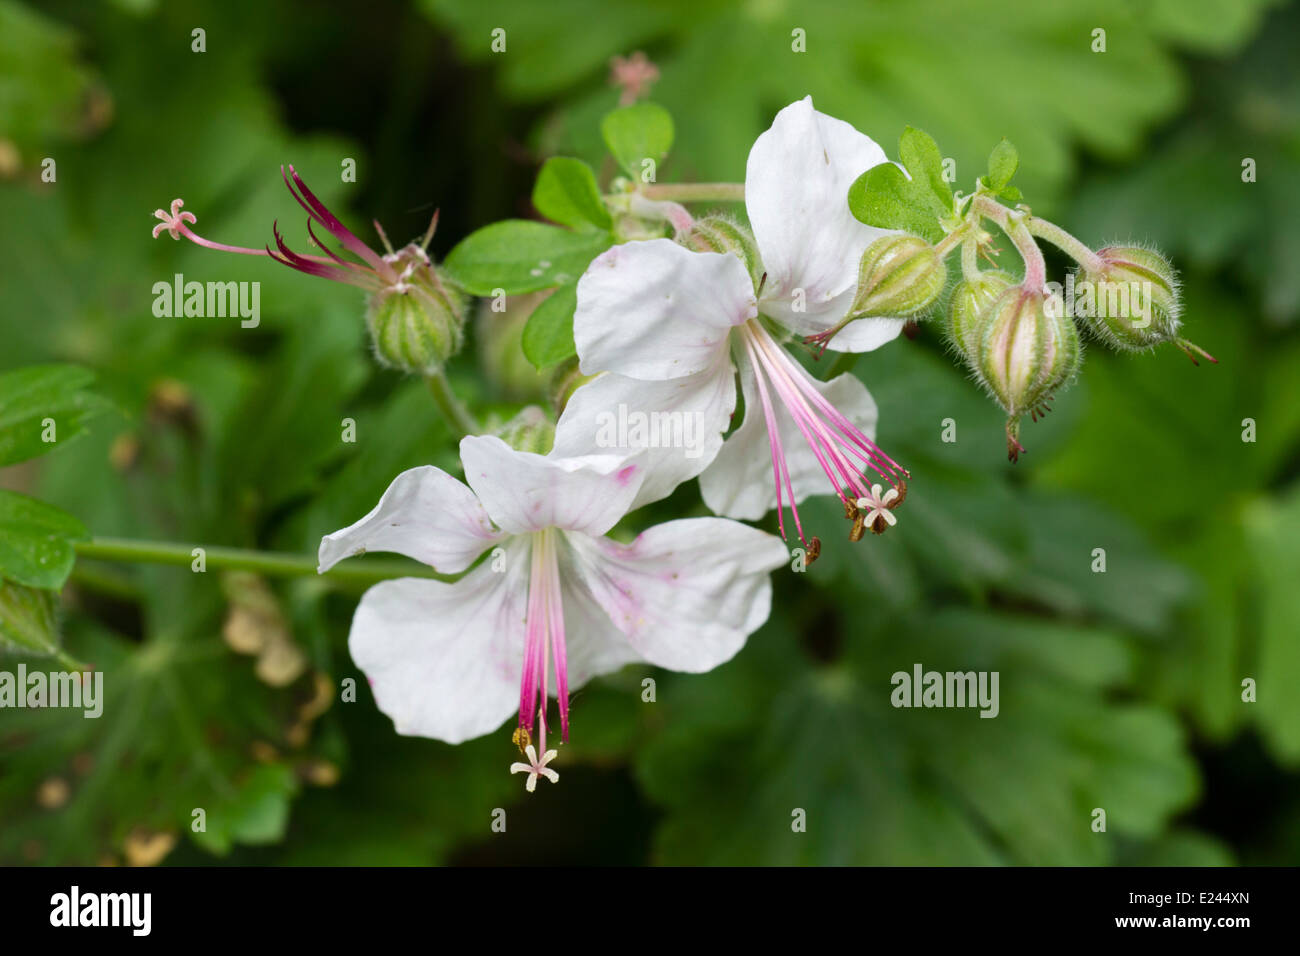 White flowers of the evergreen hardy geranium, Geranium macrorrhizum 'Album' Stock Photo